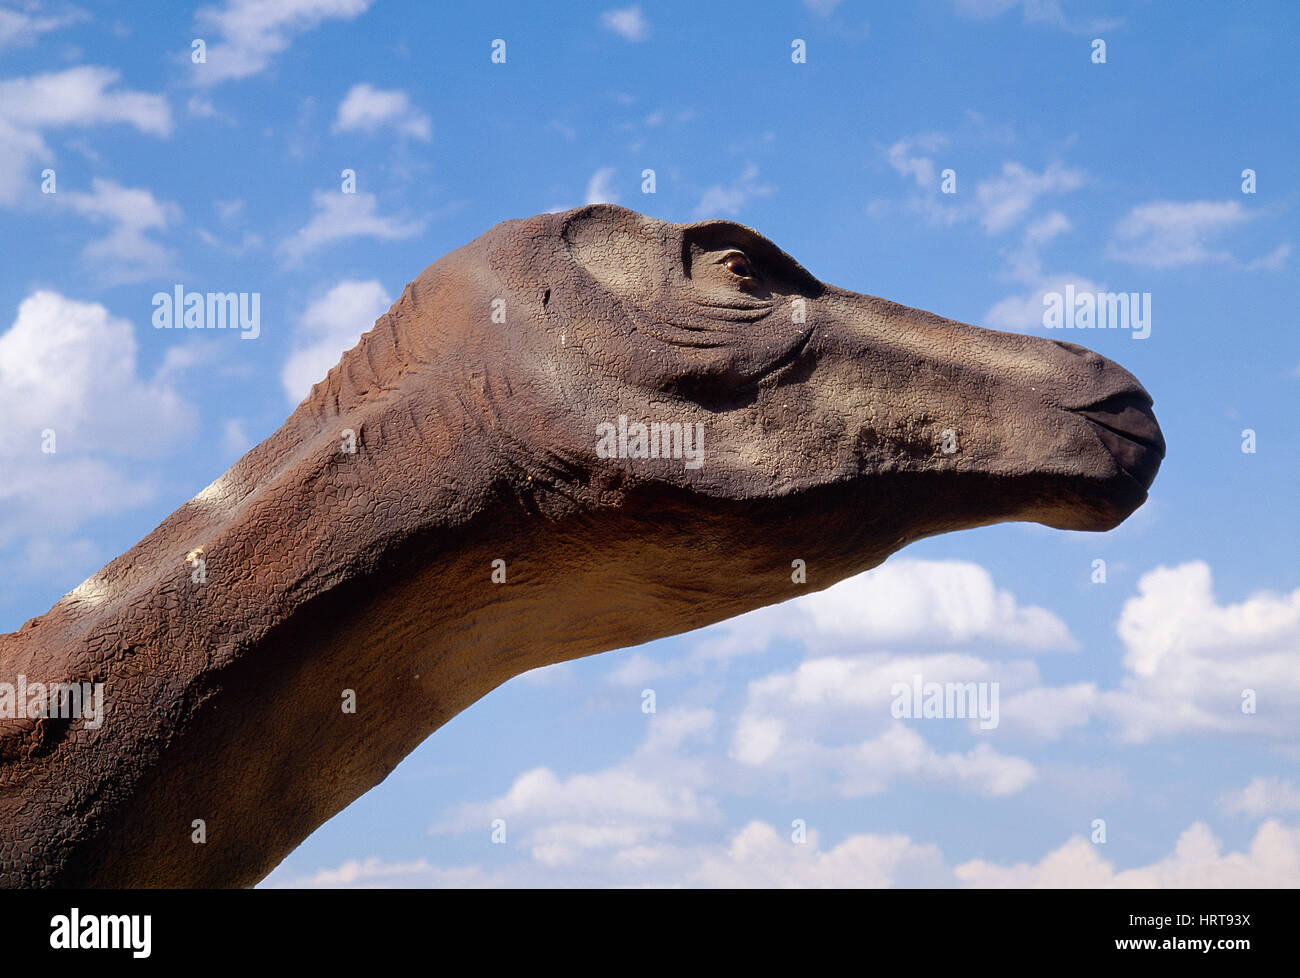 Dinosaurier Kopf. Salas de Los Infantes, Burgos Provinz Kastilien-Leon, Spanien. Stockfoto